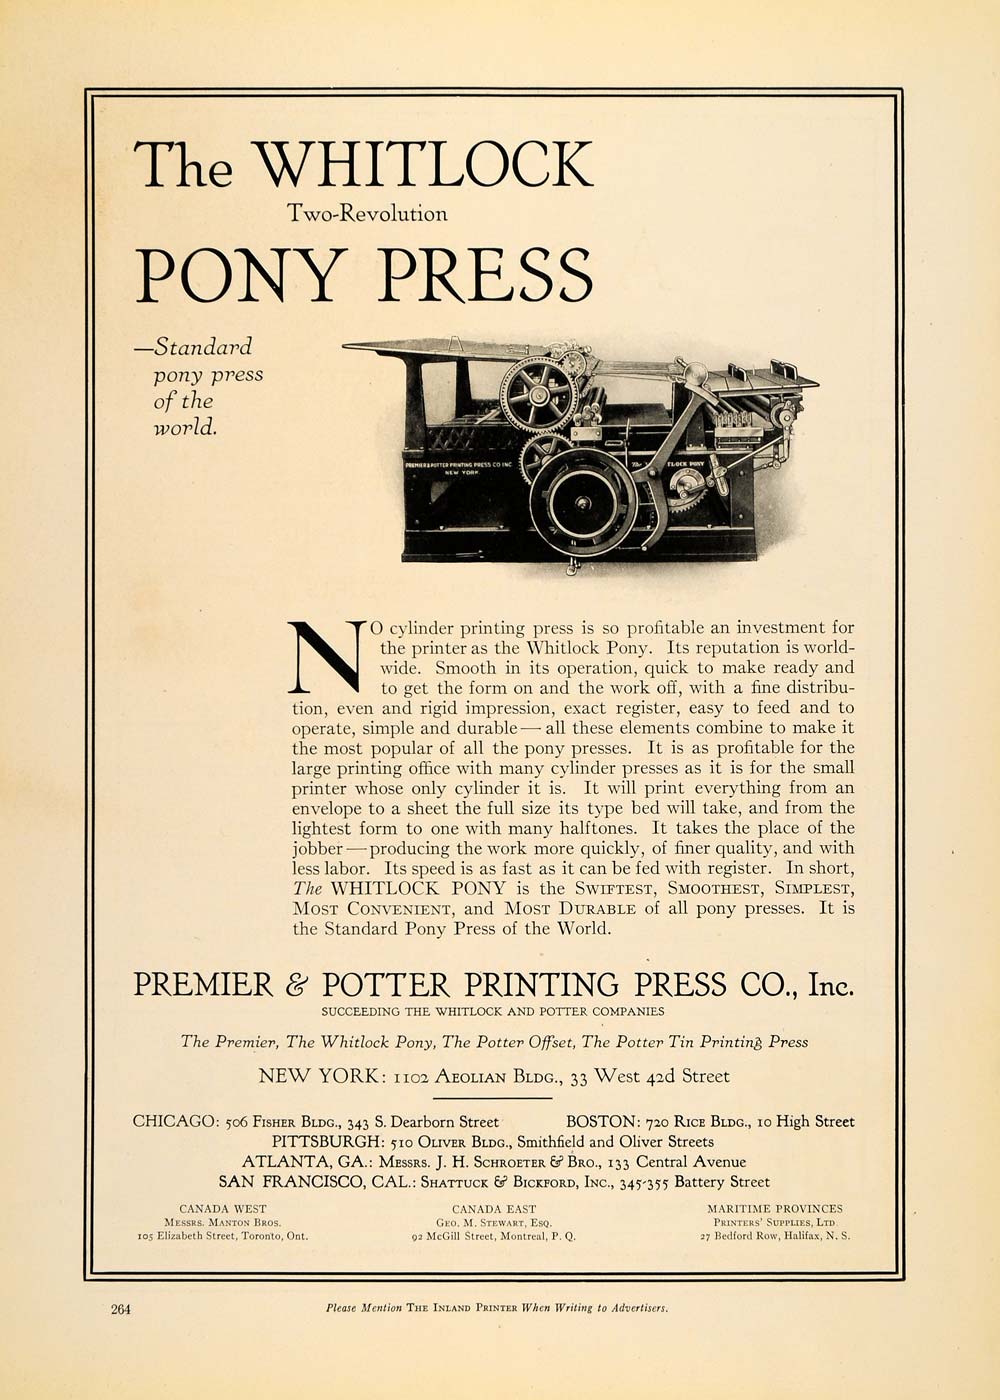 1921 Ad Premier & Potter Printing Press Whitlock Pony - ORIGINAL IPR1